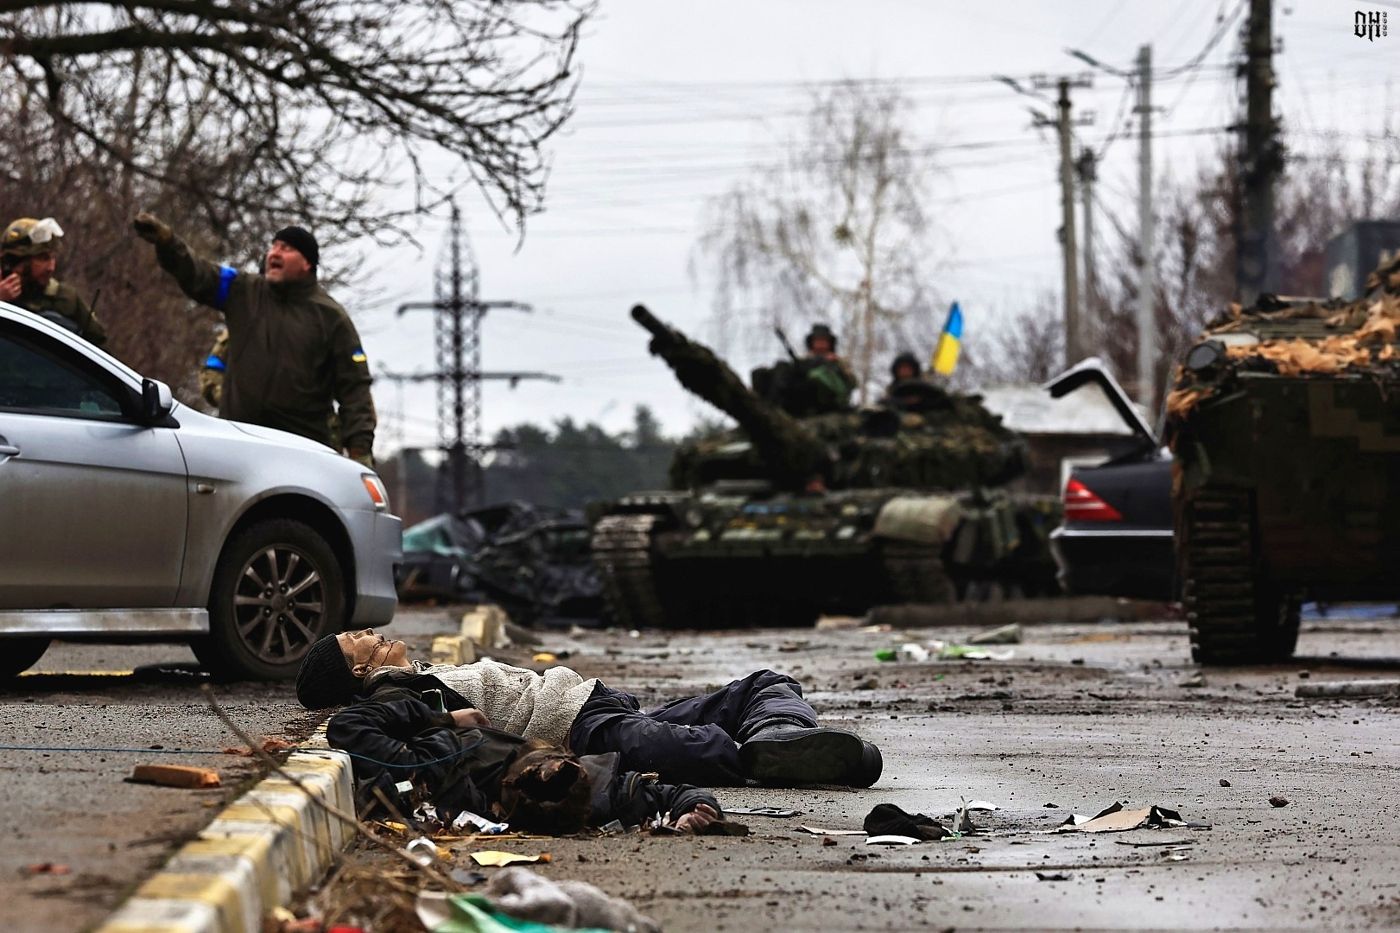 DH - Bucha destruction and massacre under Russian occupation 26 - Feb-Apr 2022 - Bucha Ukraine.jpg